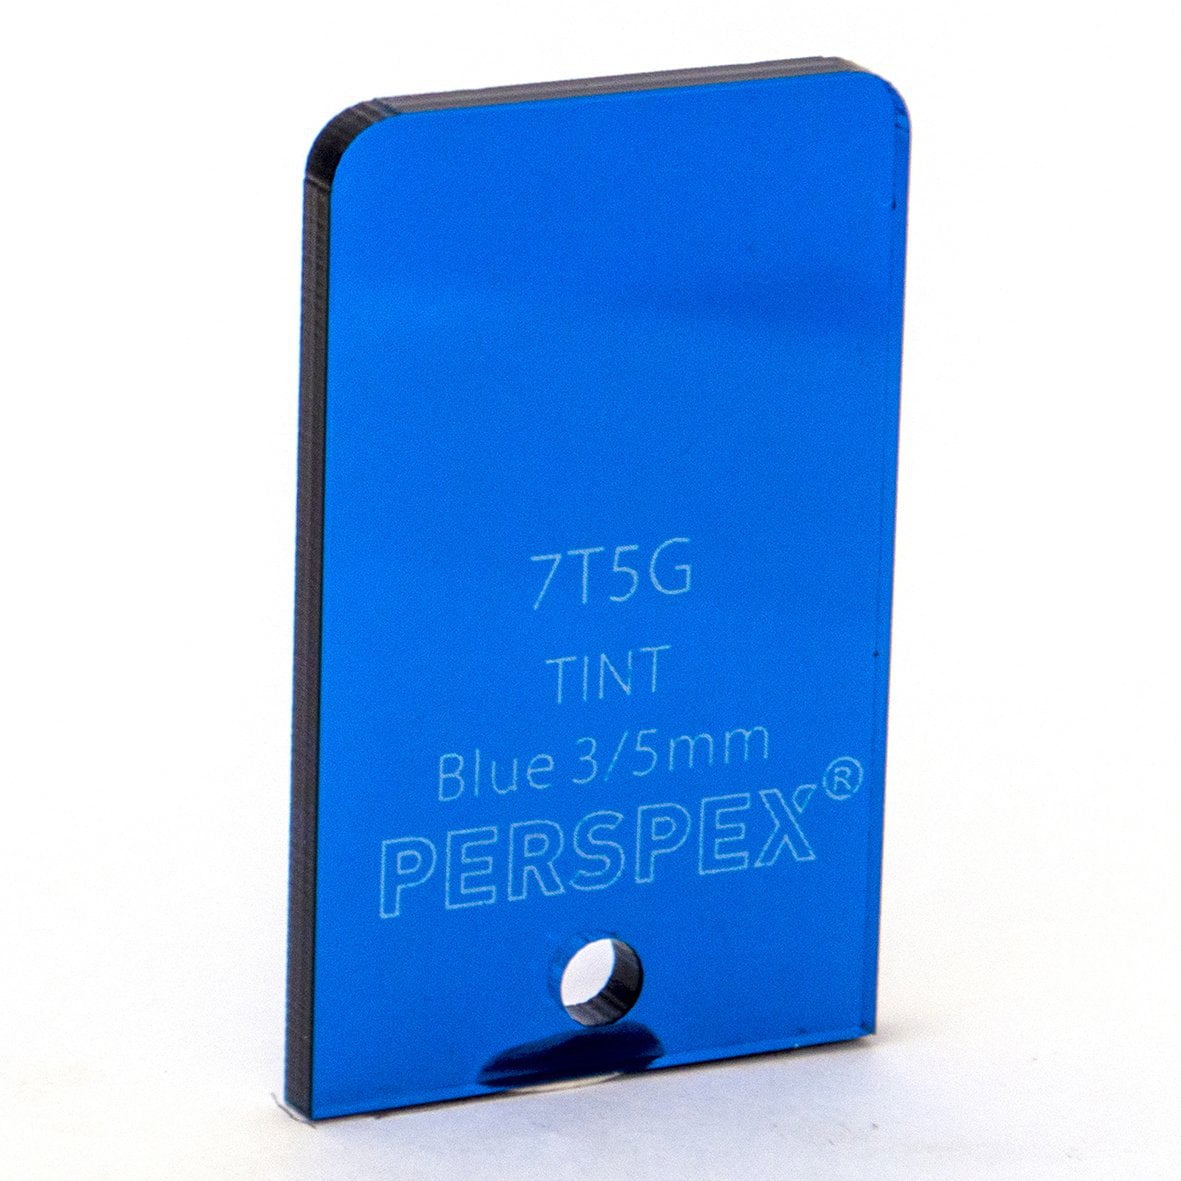 3mm Blue Tint 7T5G, 1000x600mm